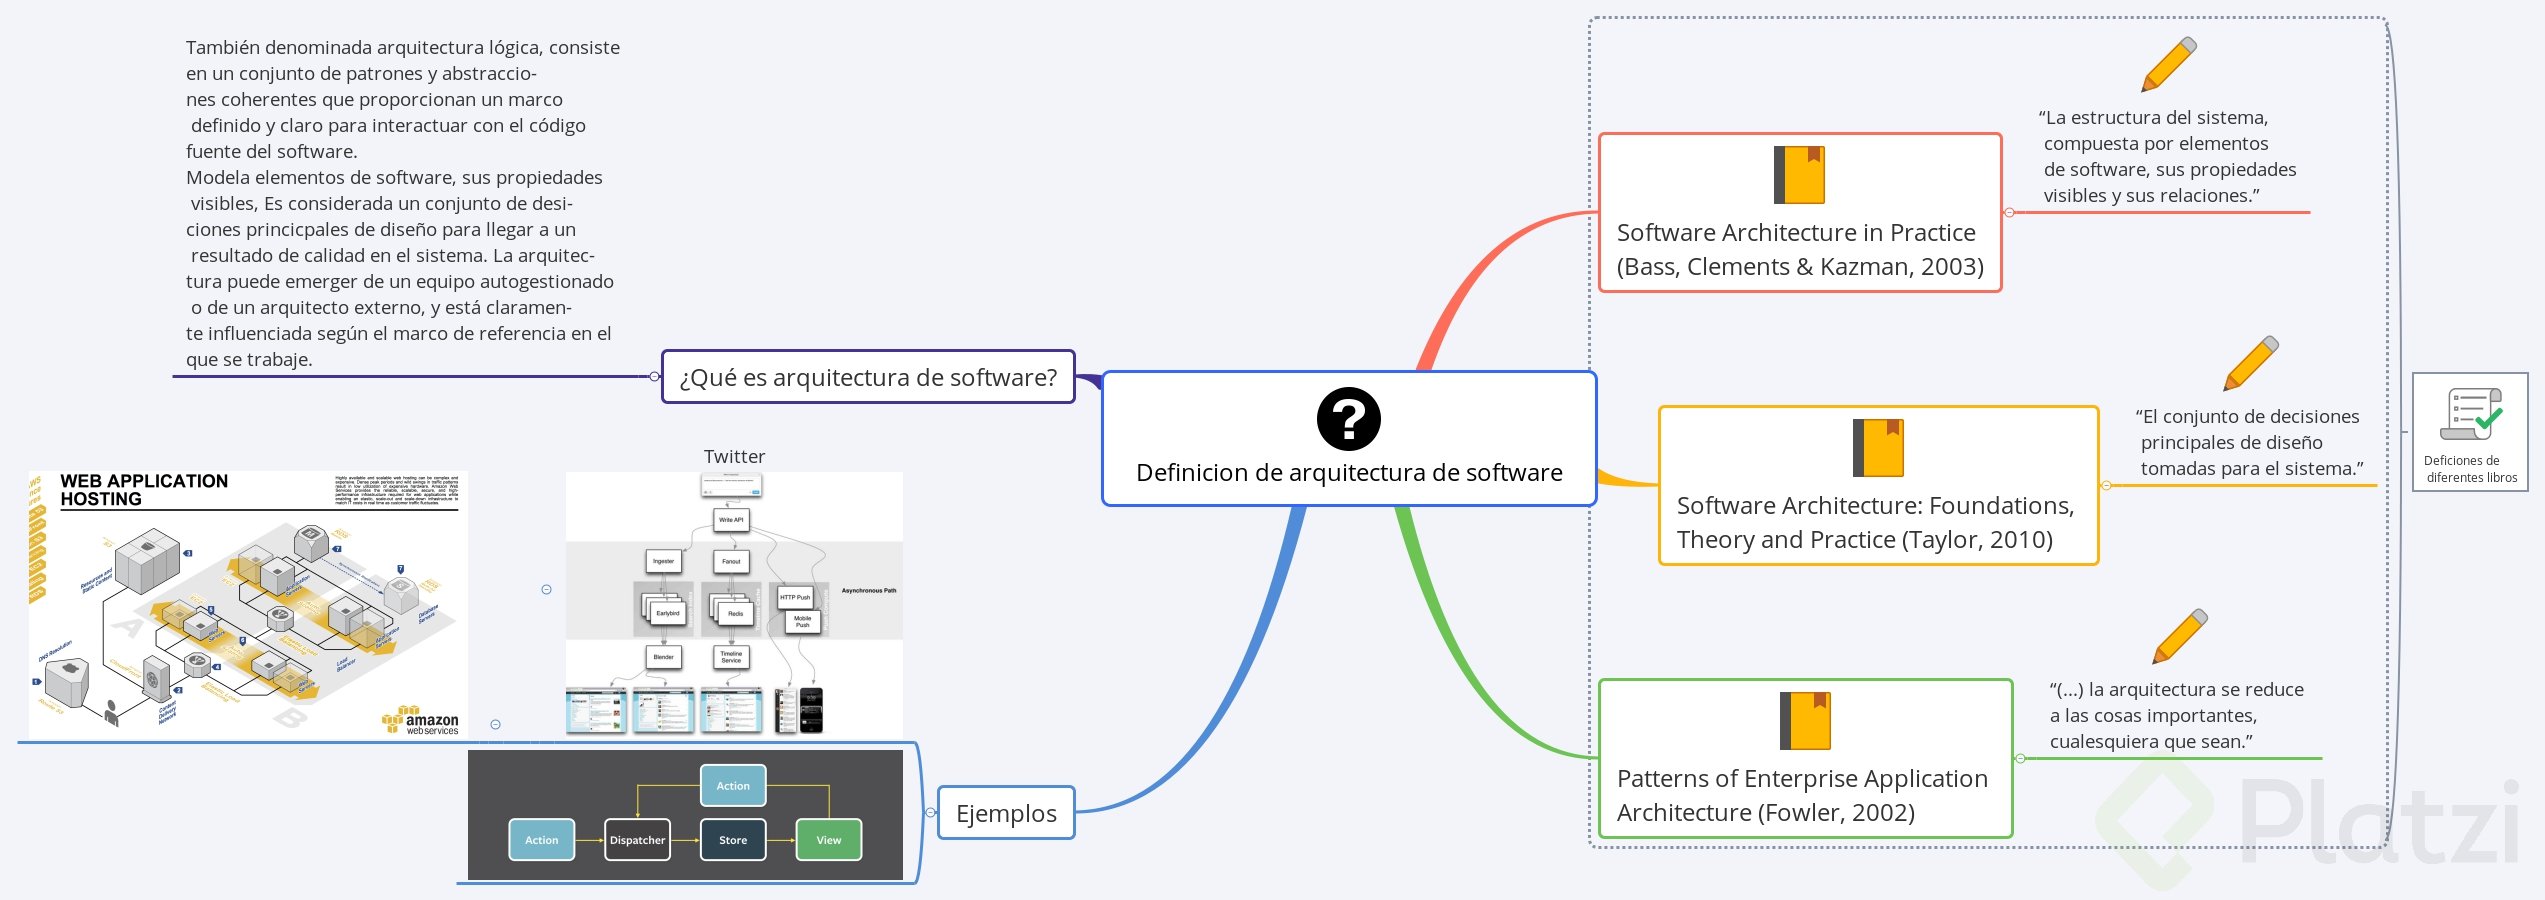 Definicion de arquitectura de software.png